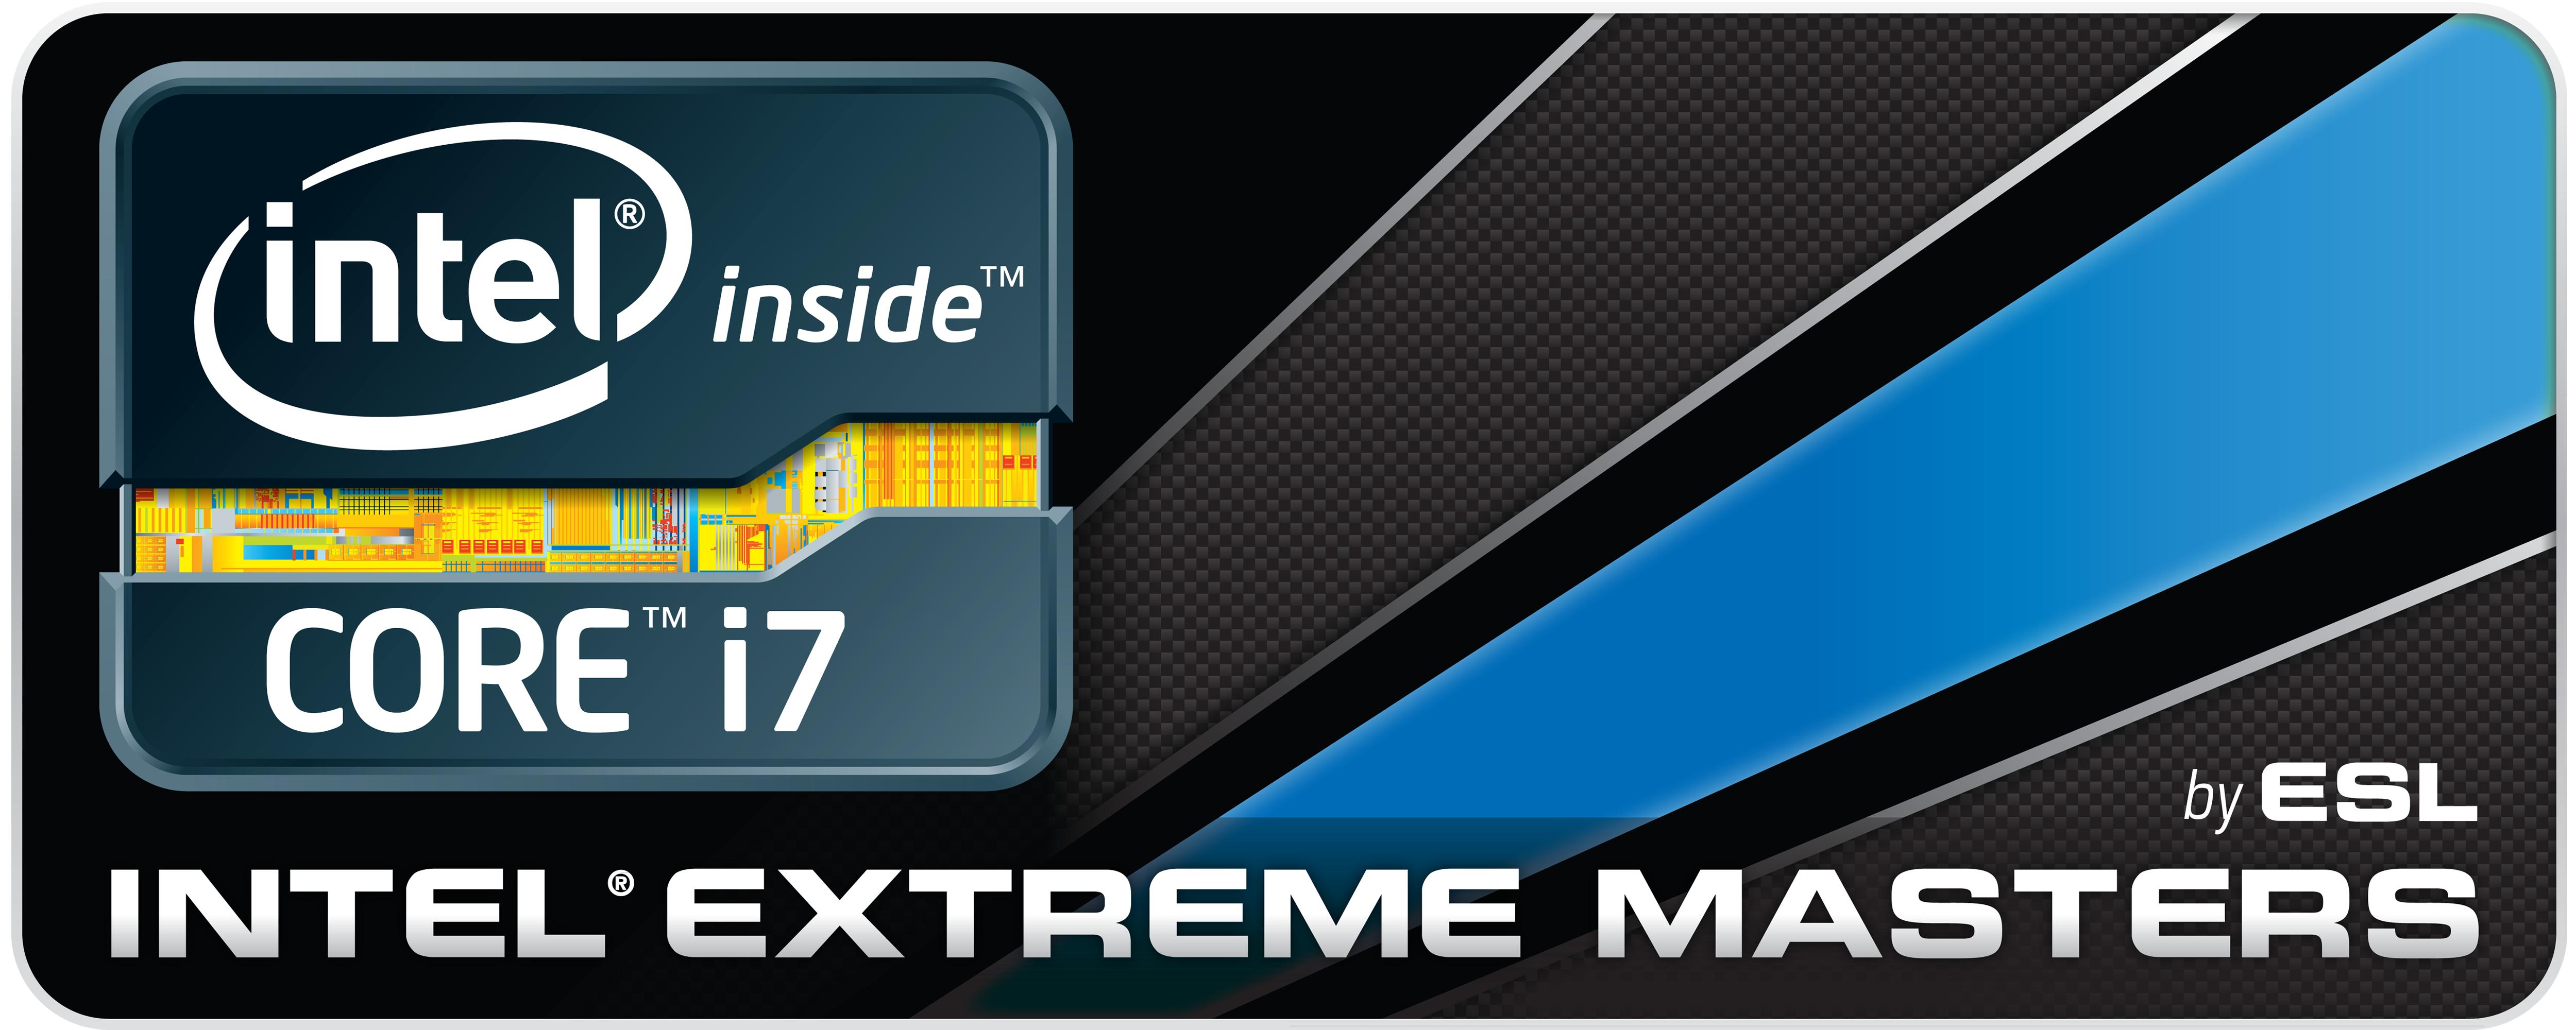 Original Logo) Intel Extreme Masters Core i7 by 18cjoj on DeviantArt